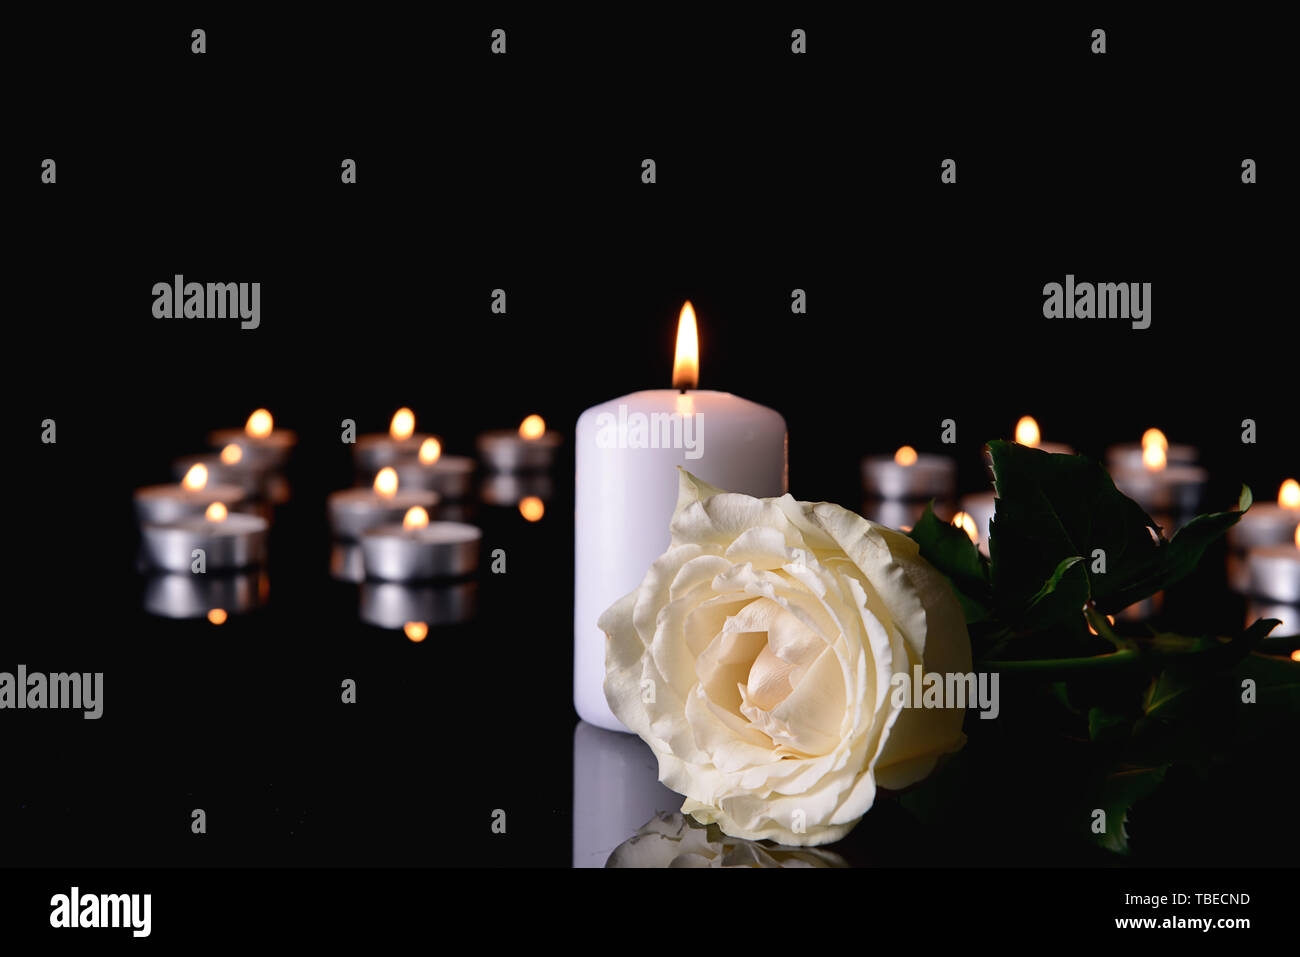 Burning candle and flower on black background Stock Photo